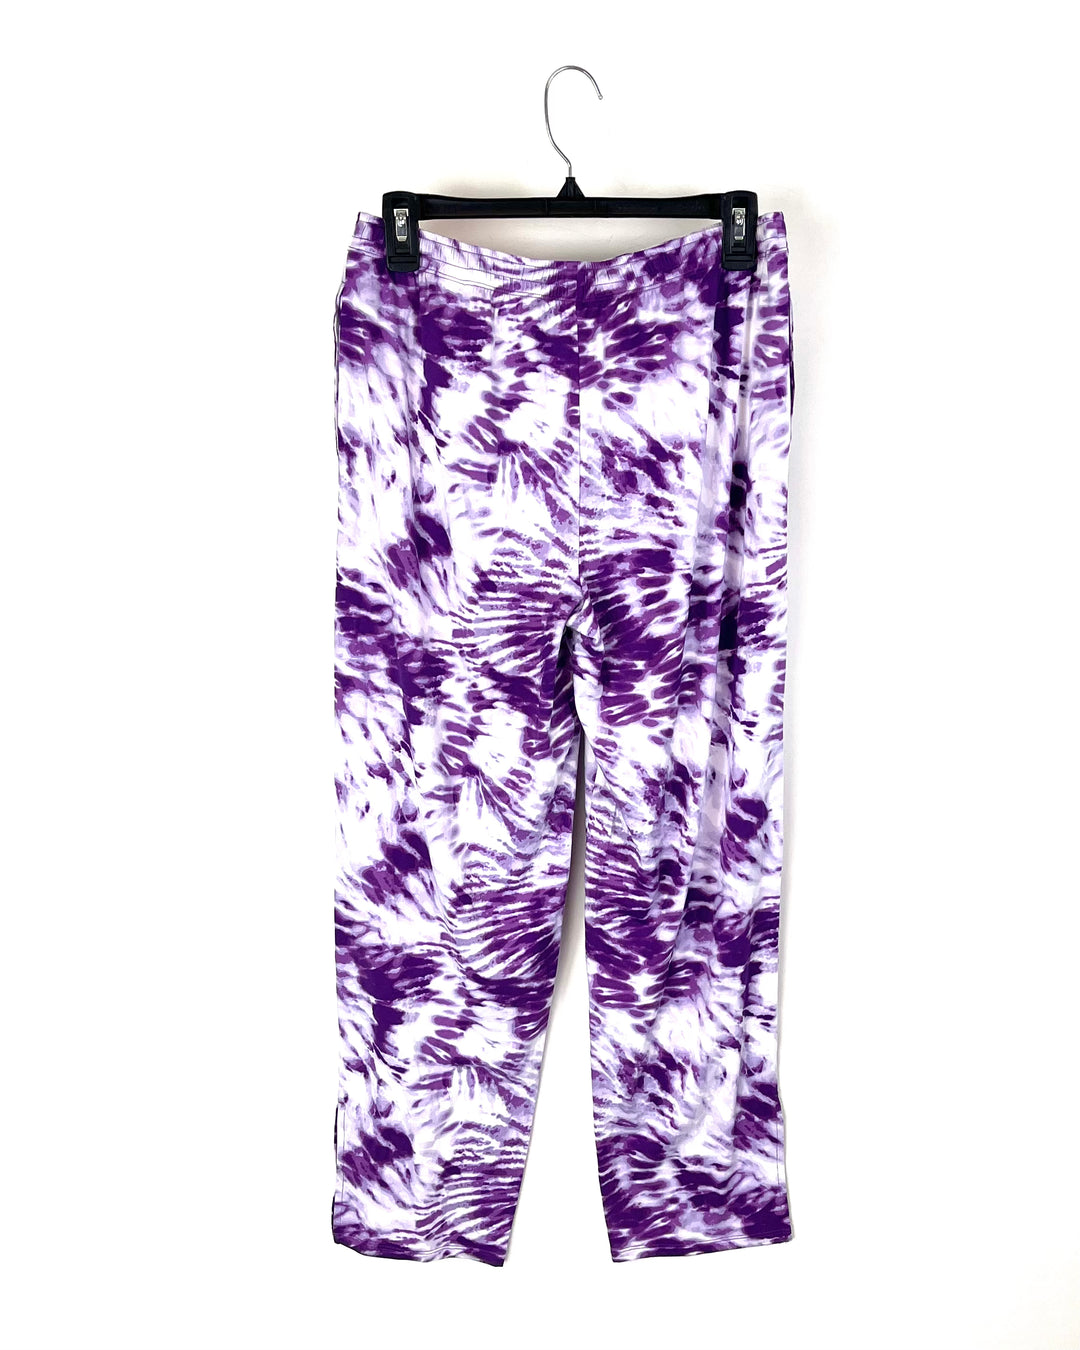 Purple Tie Dye Pants - Small/Medium